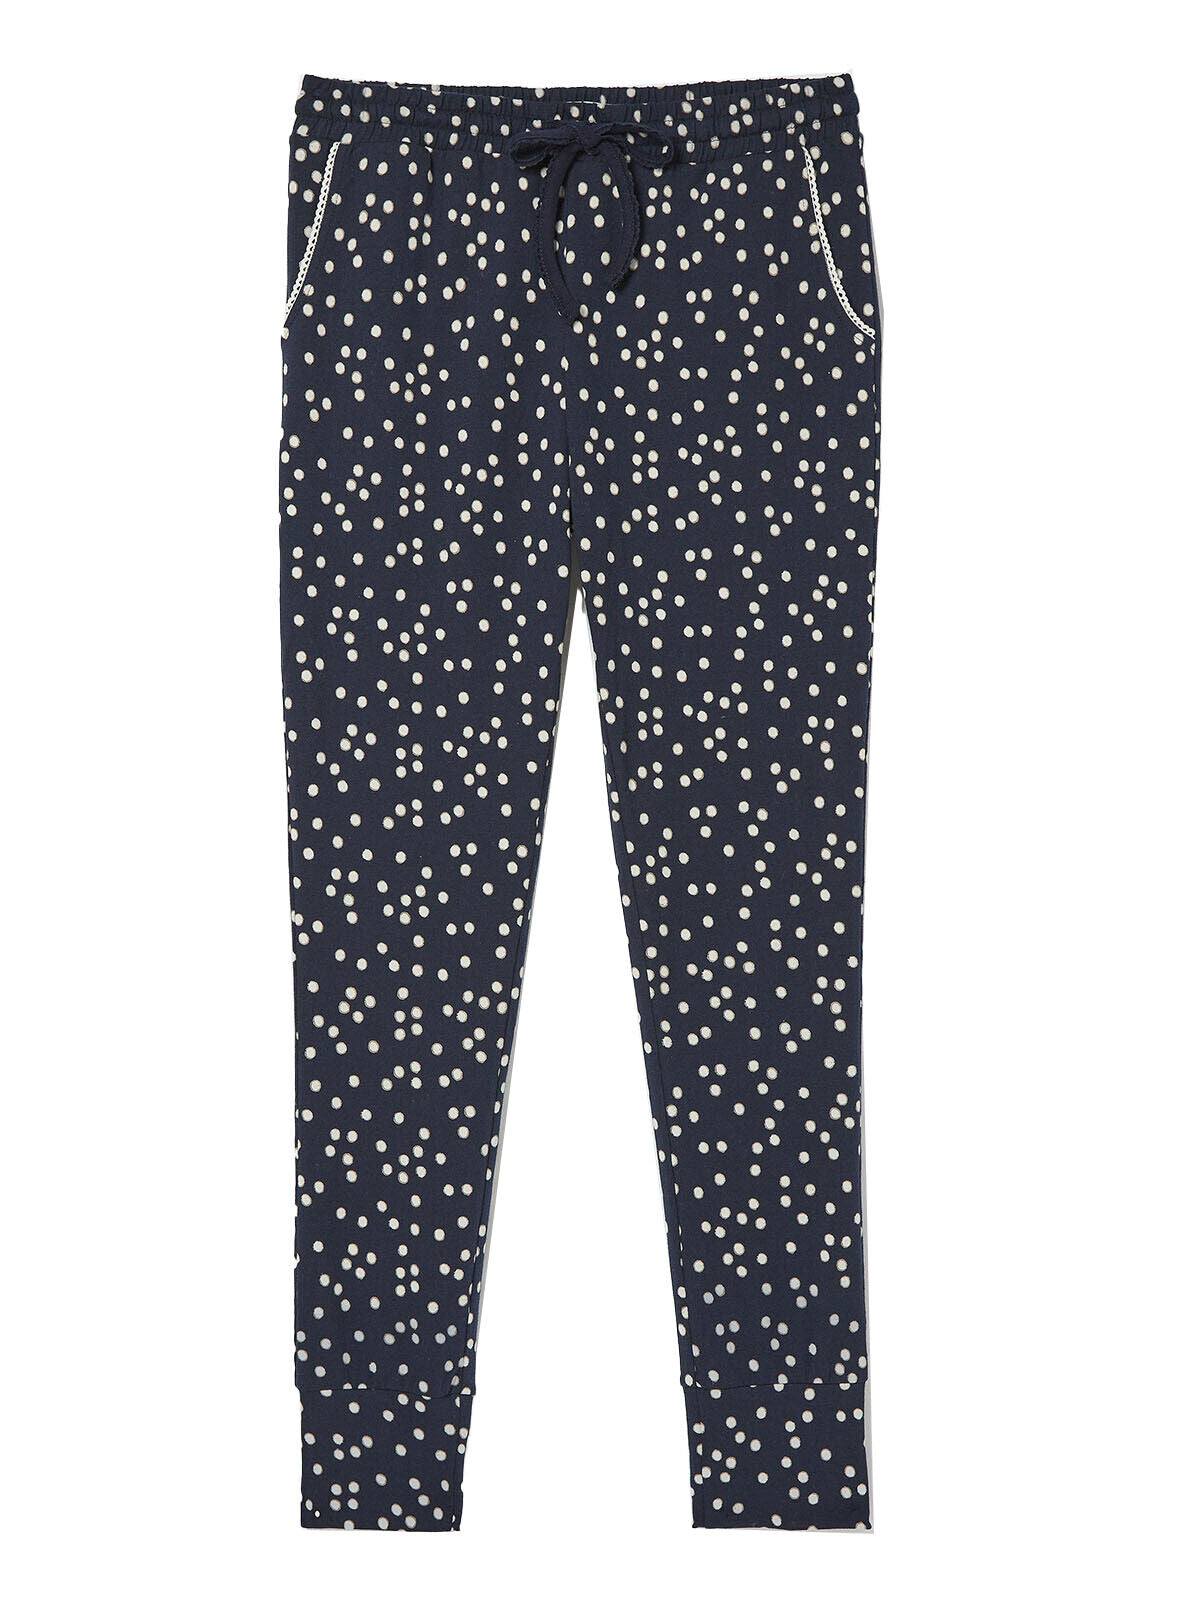 EX Fat Face Navy Ellie Spot Pyjama Lounge Pants Leggings 6 8 10 12 14 RRP £29.50